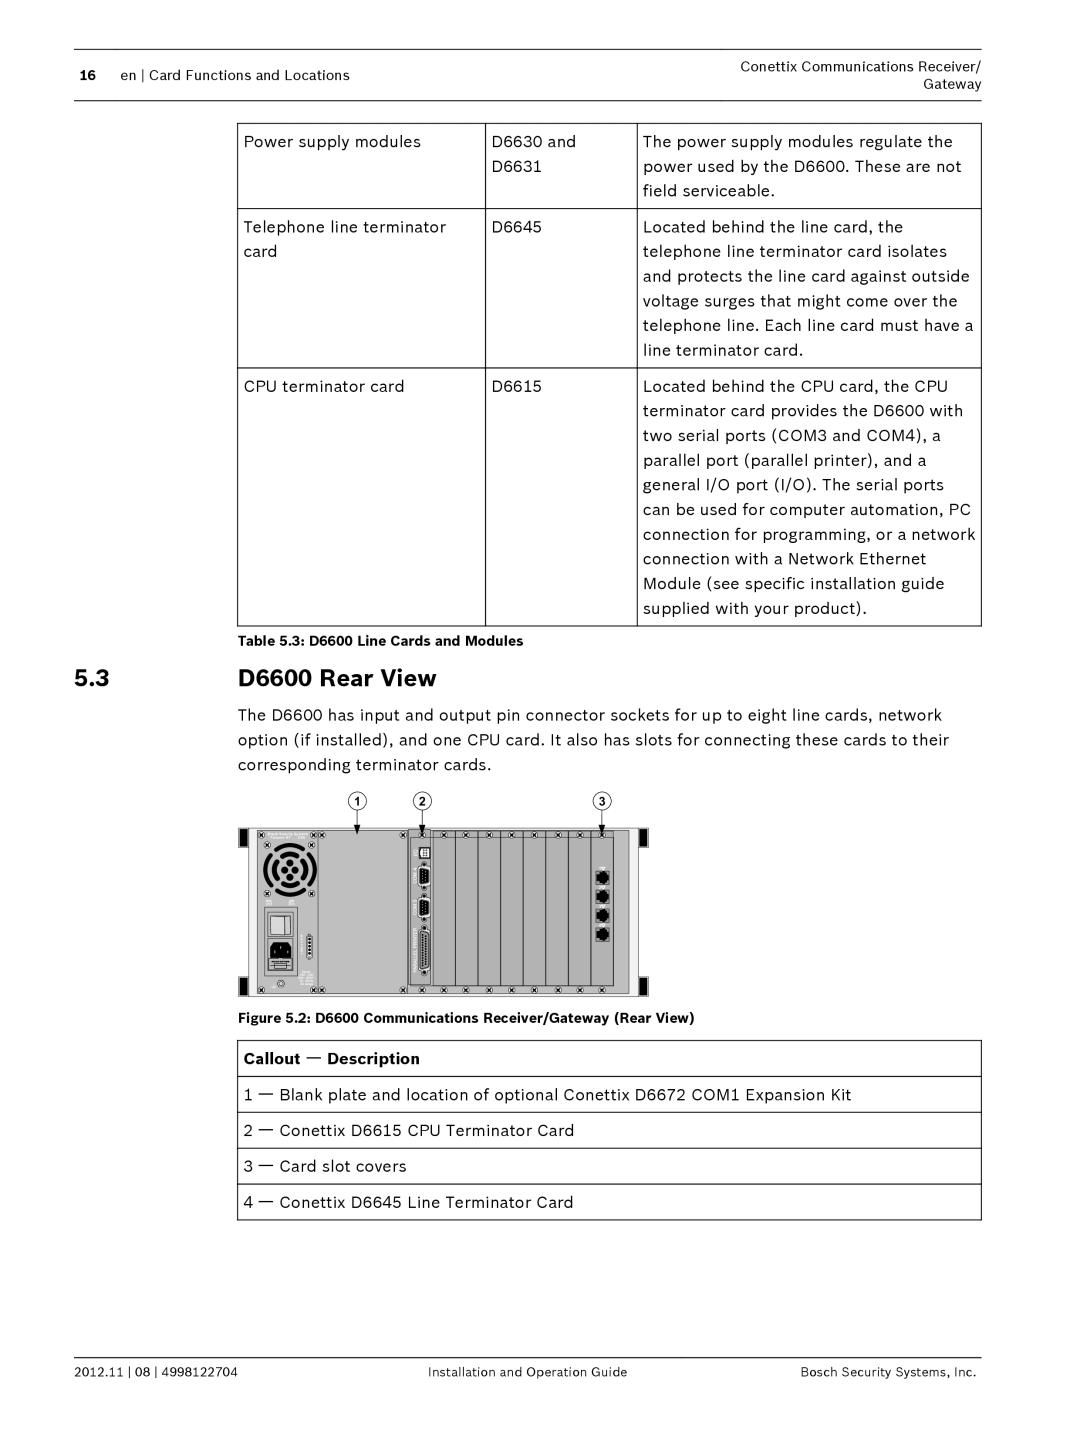 Bosch Appliances installation and operation guide D6600 Rear View, Callout ᅳ Description 